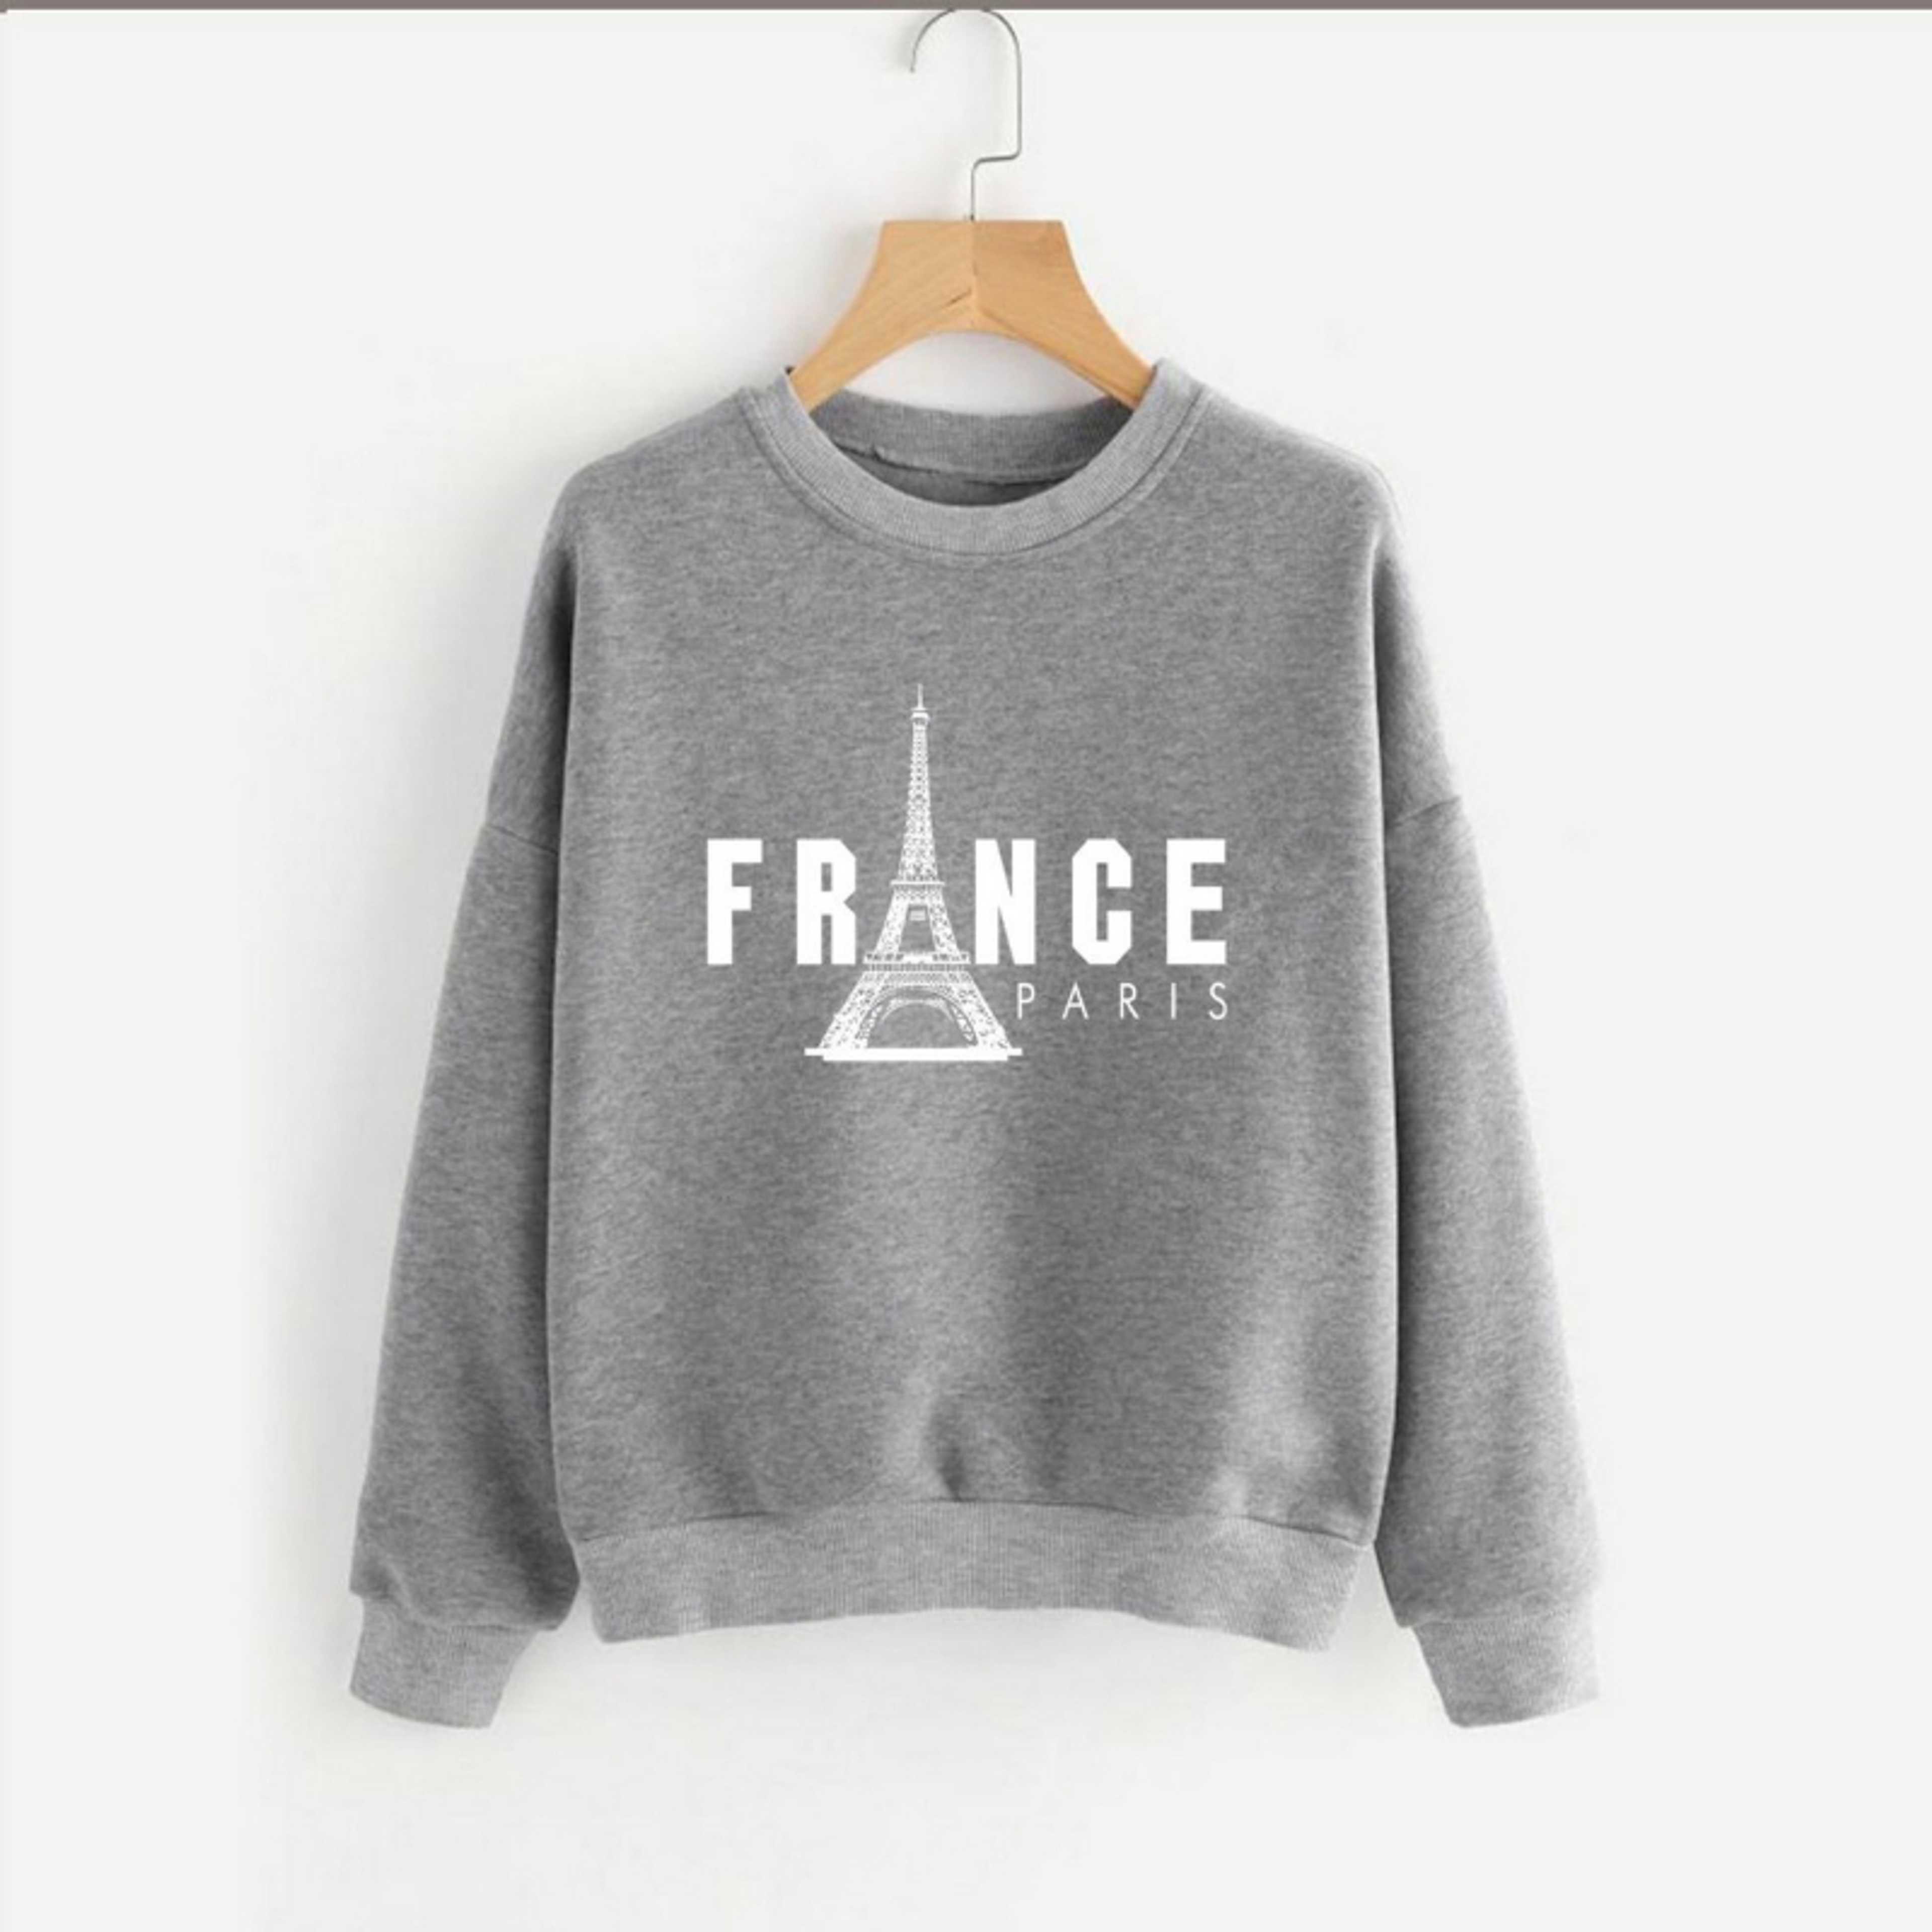 Paris De France Crew Neck Sweatshirt